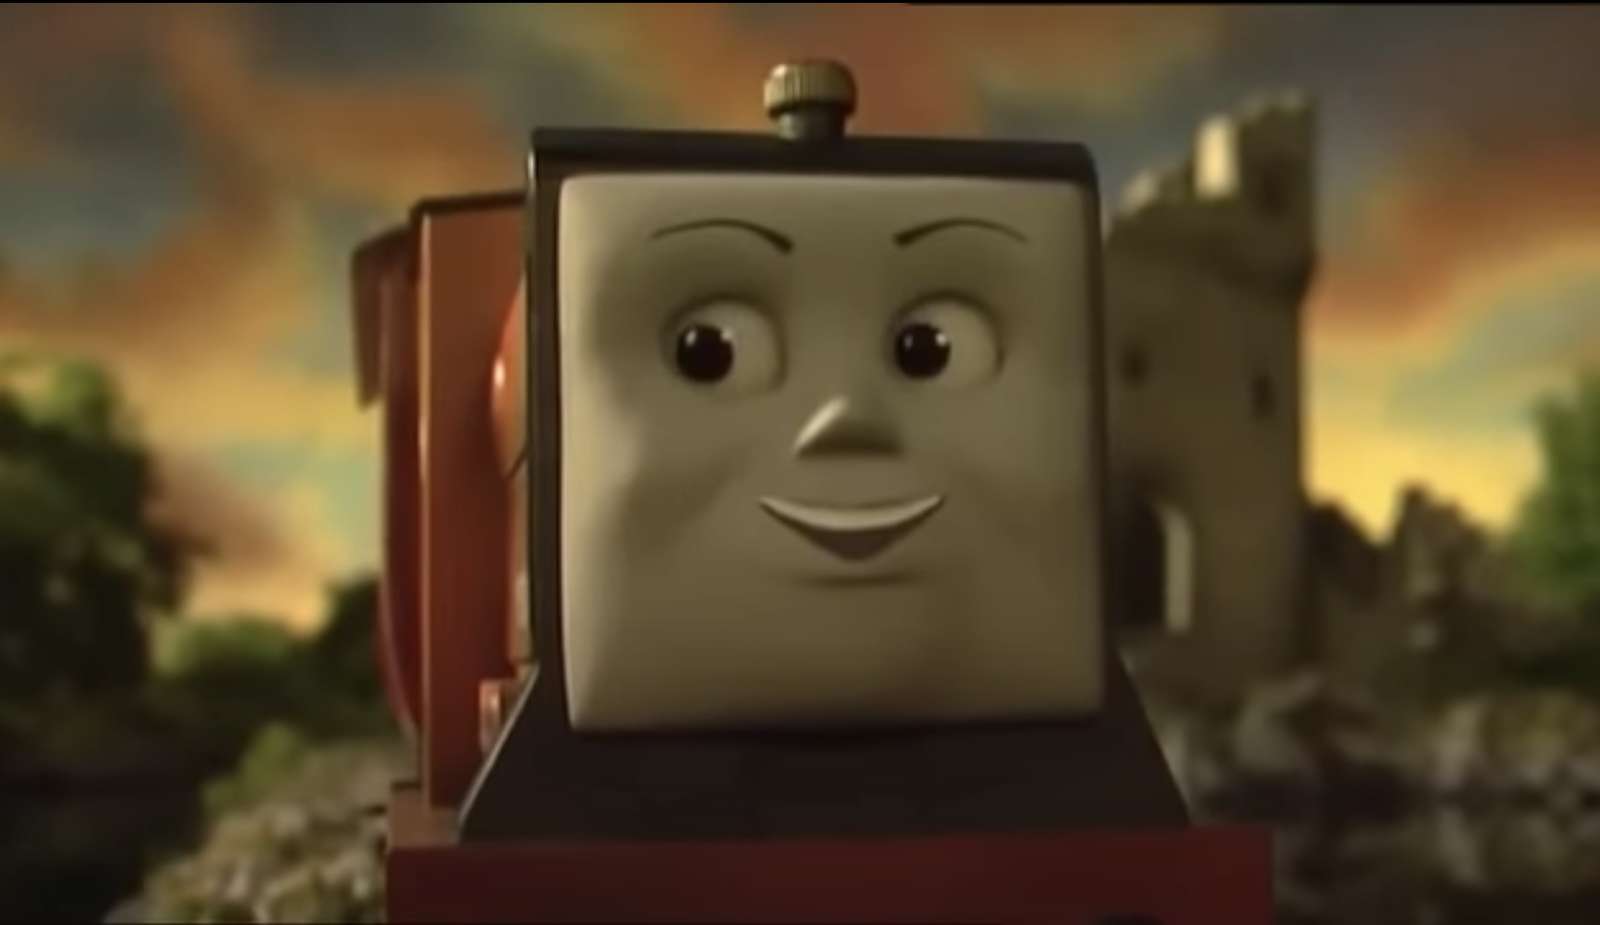 Thomas și prietenii melodii puzzle online